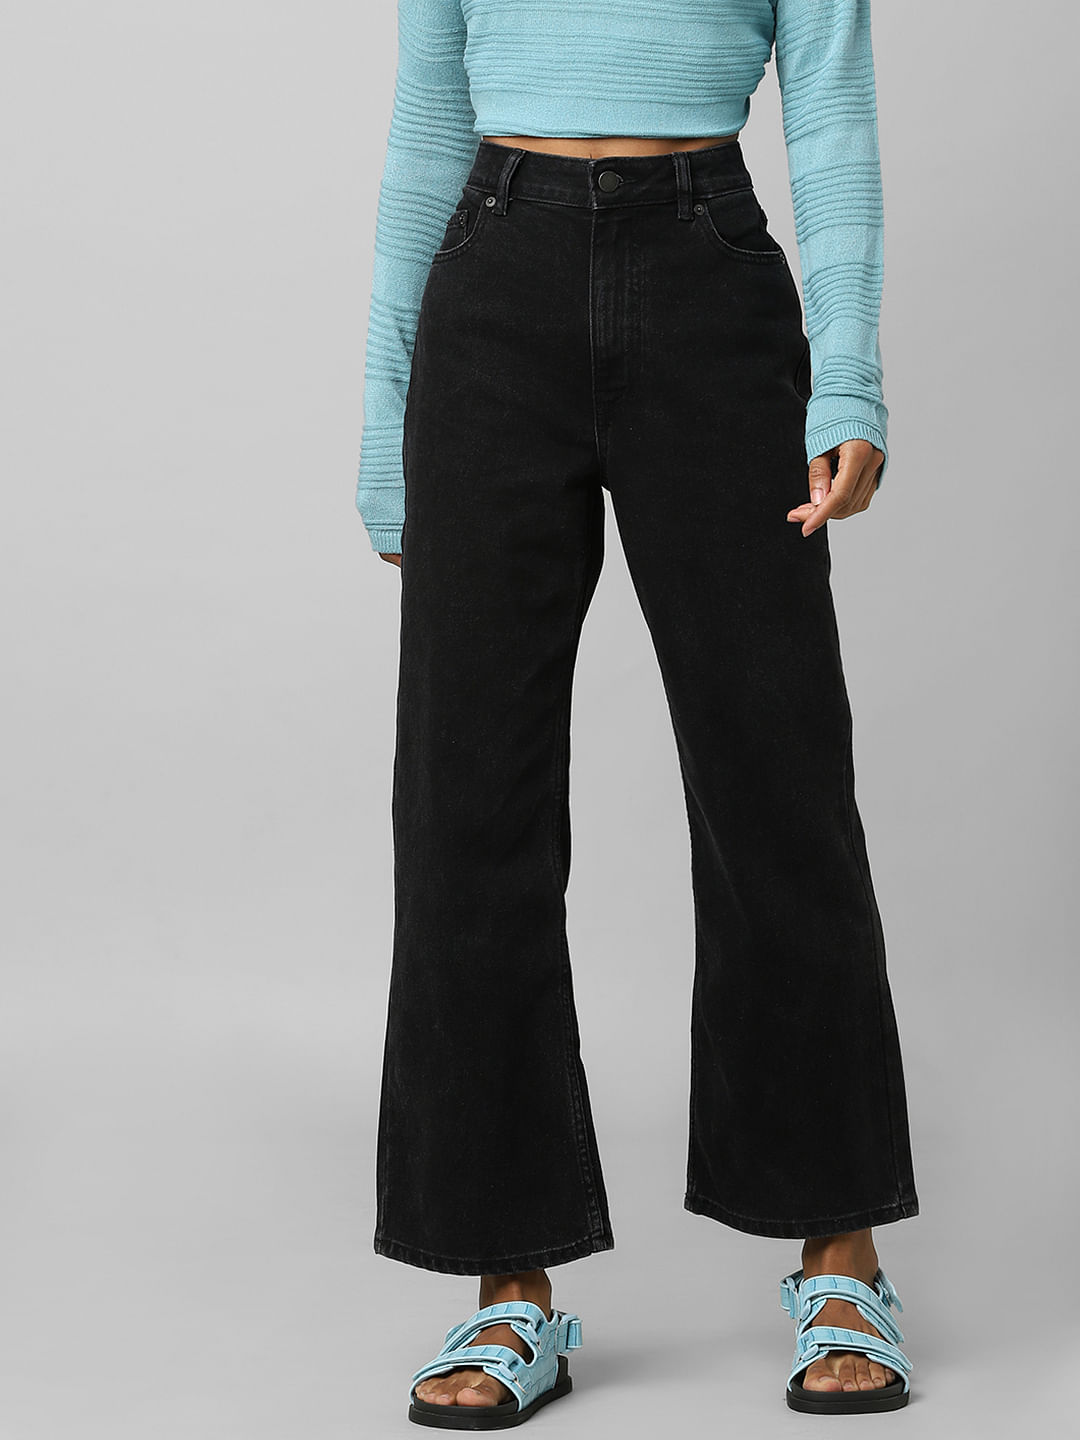 Women's Black High-Waisted Jeans | Nordstrom